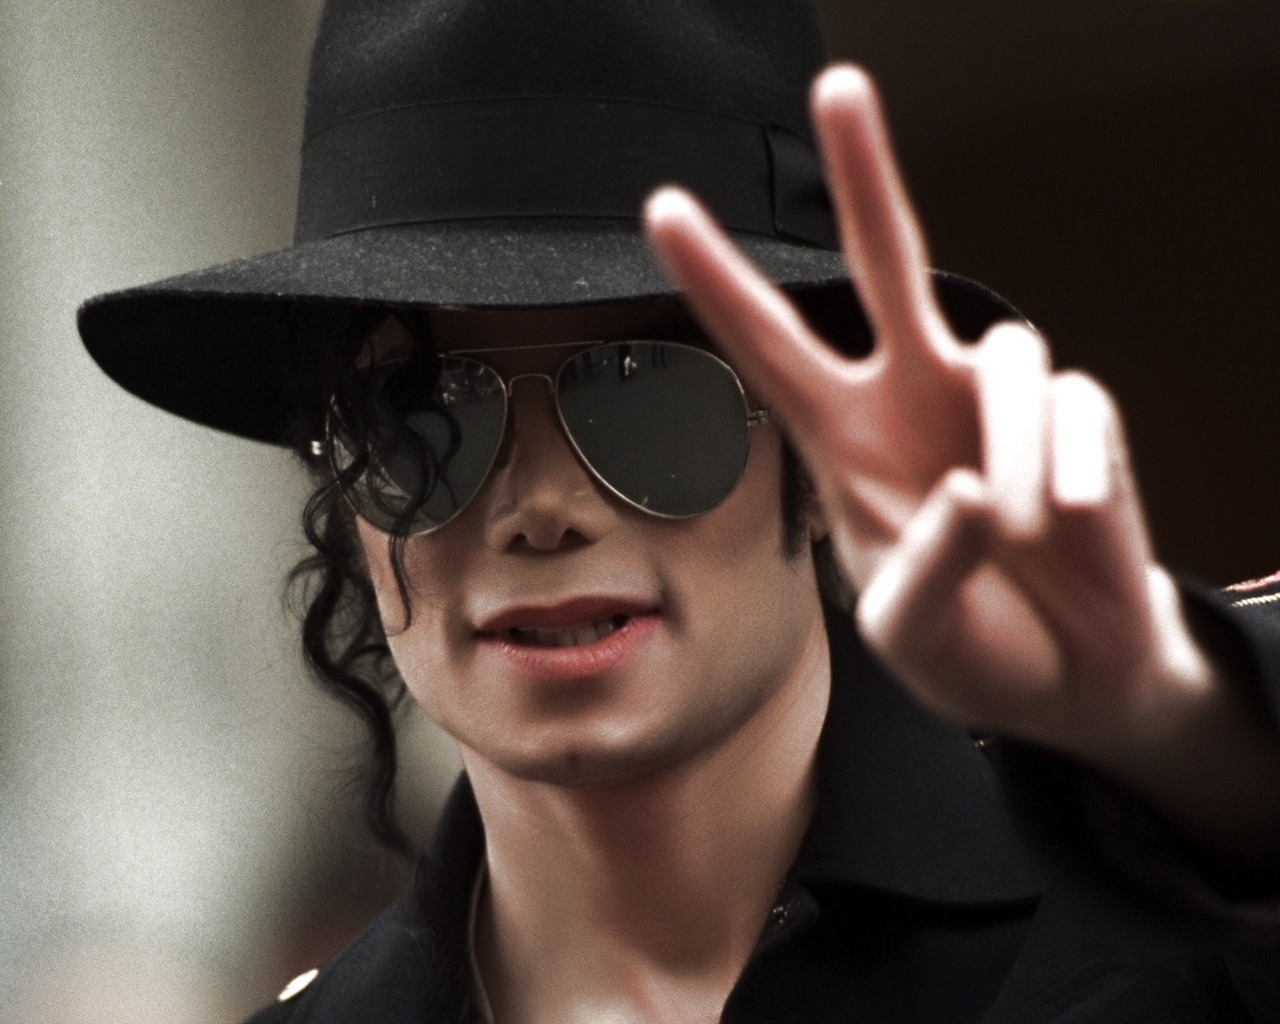 Michael Jackson Peace for 1280 x 1024 resolution